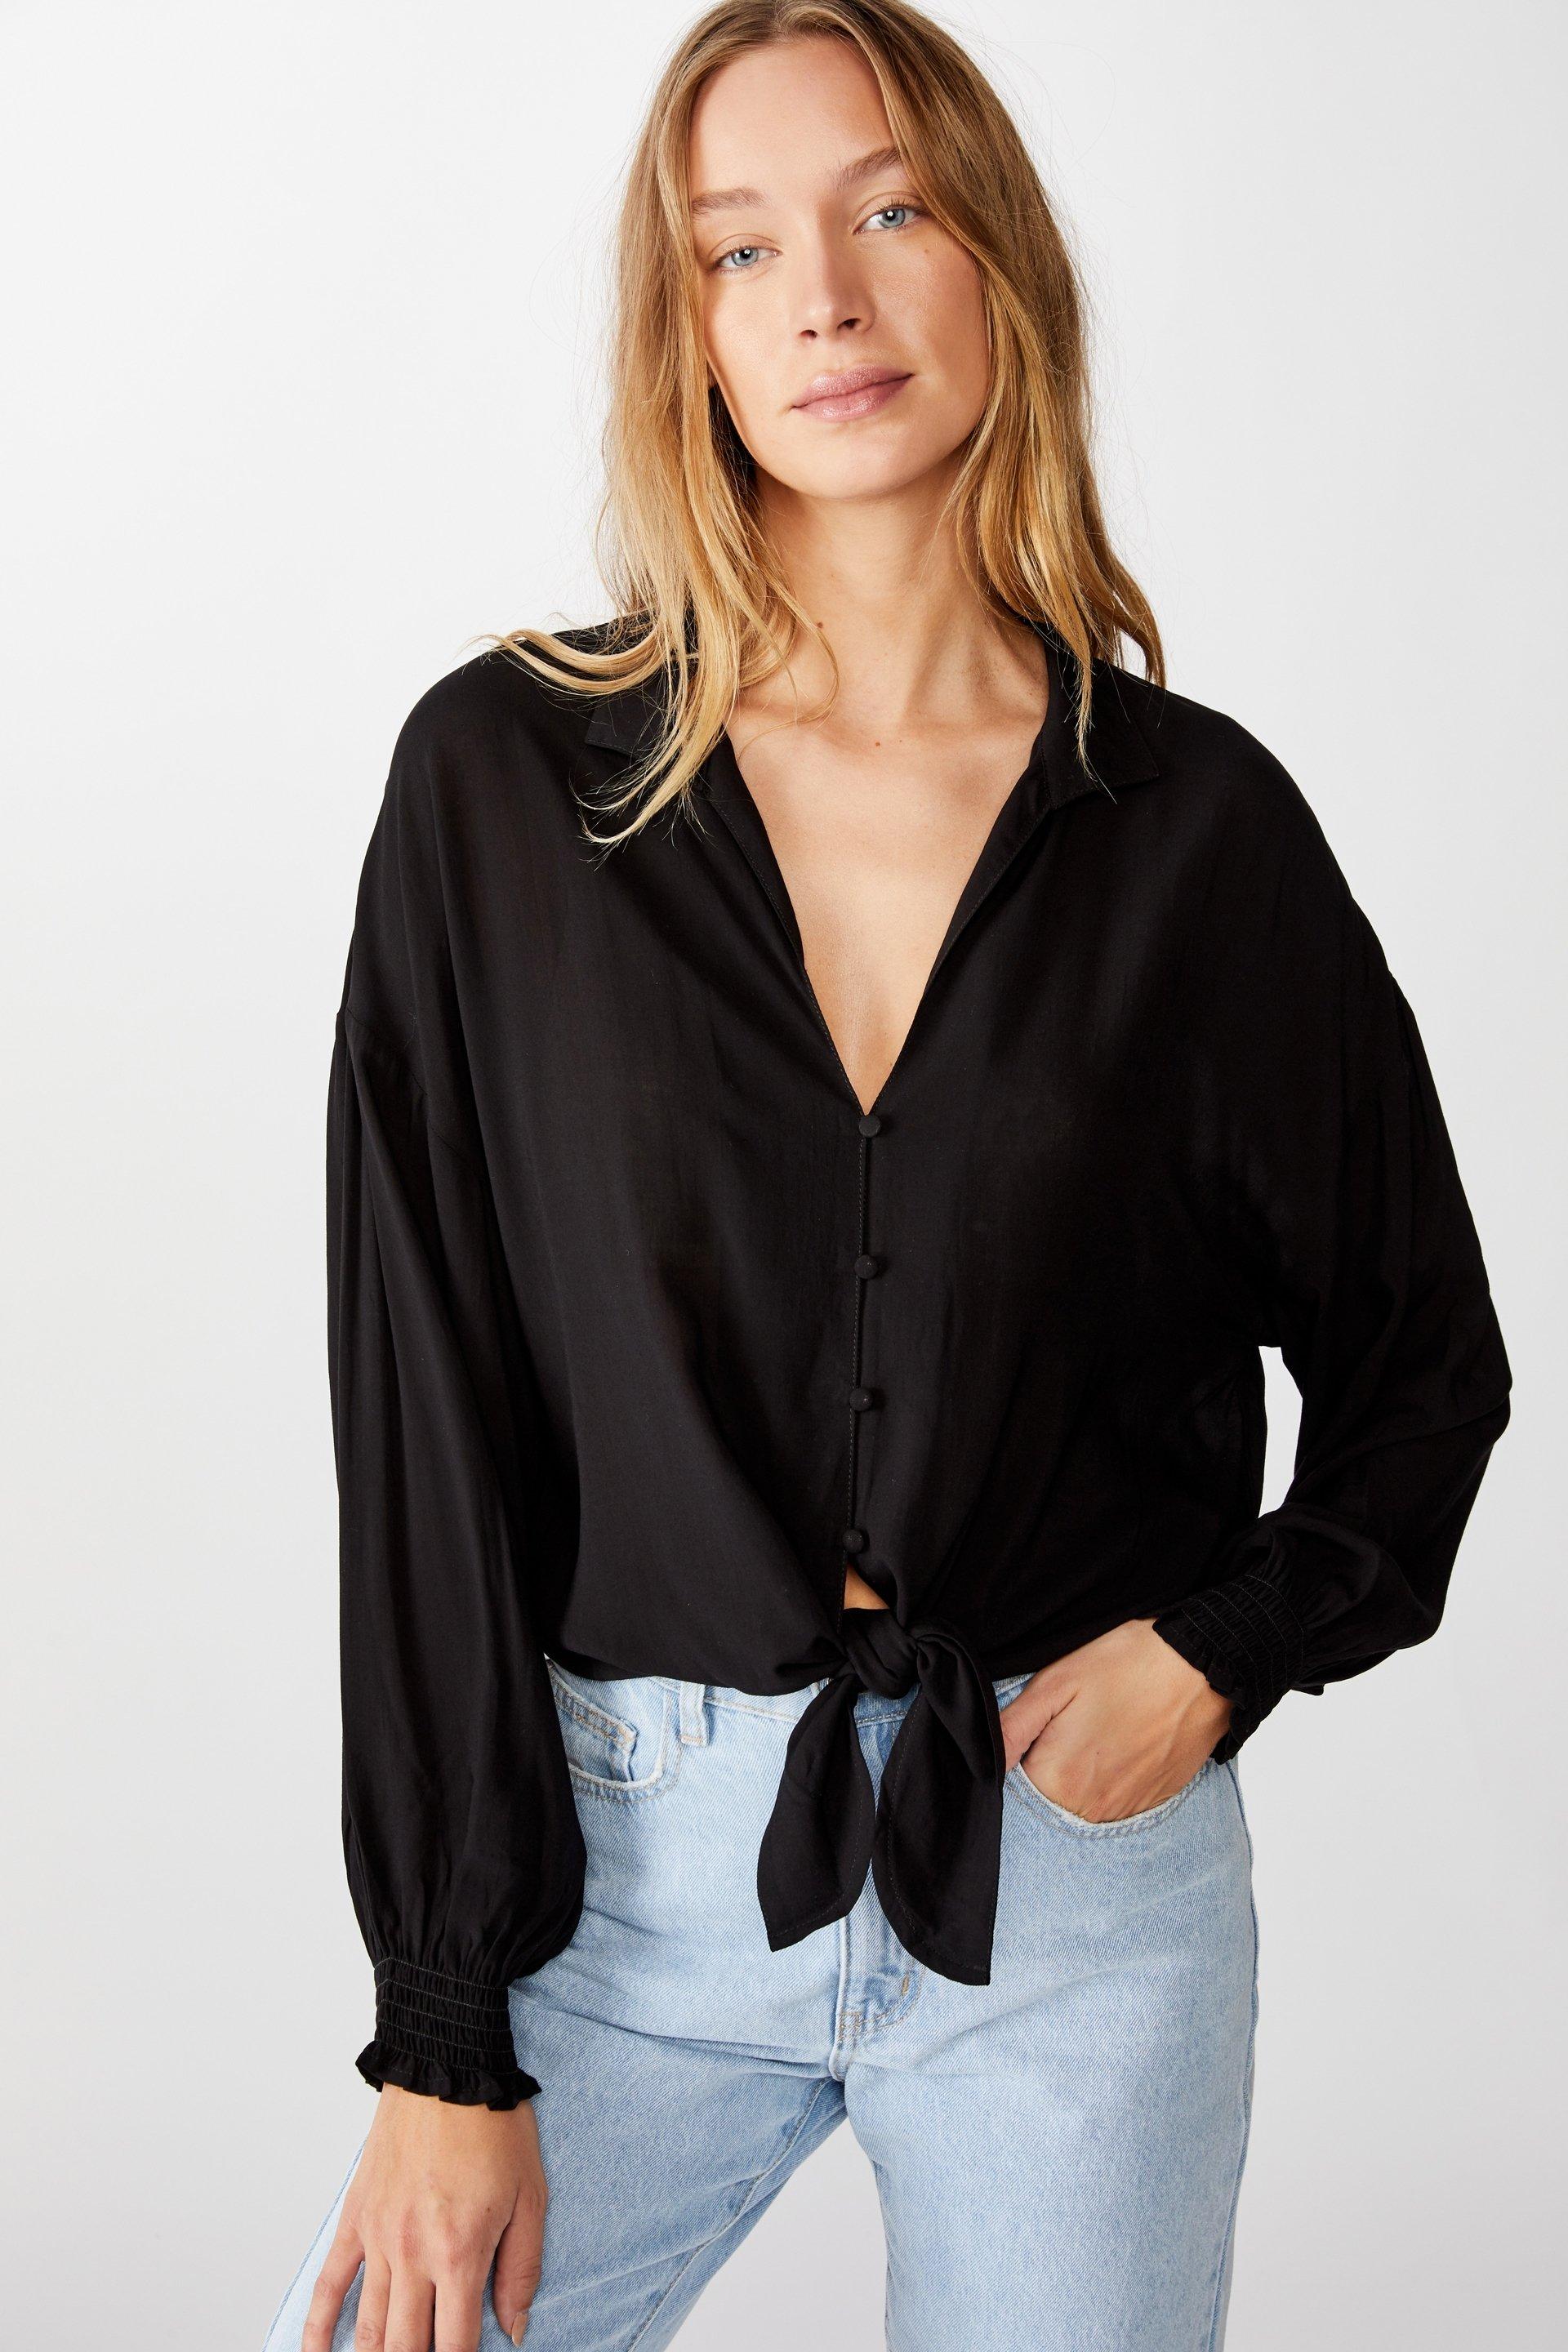 Tie front lw long sleeve blouse - black Cotton On Blouses | Superbalist.com